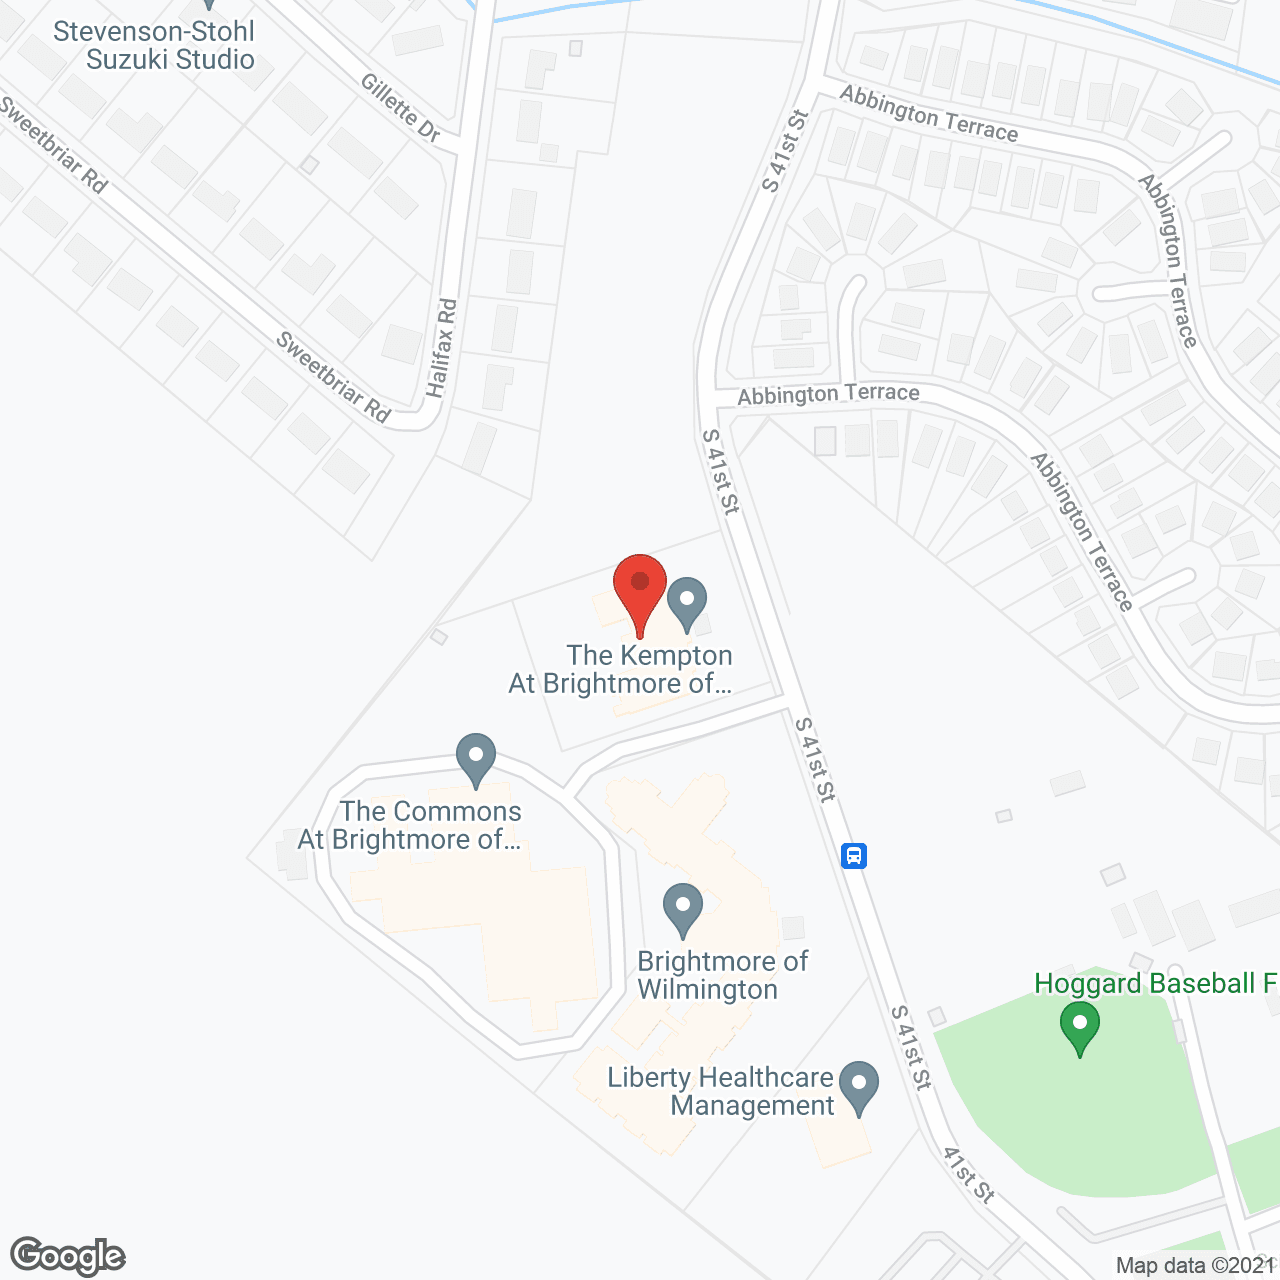 The Kempton At Brightmore in google map